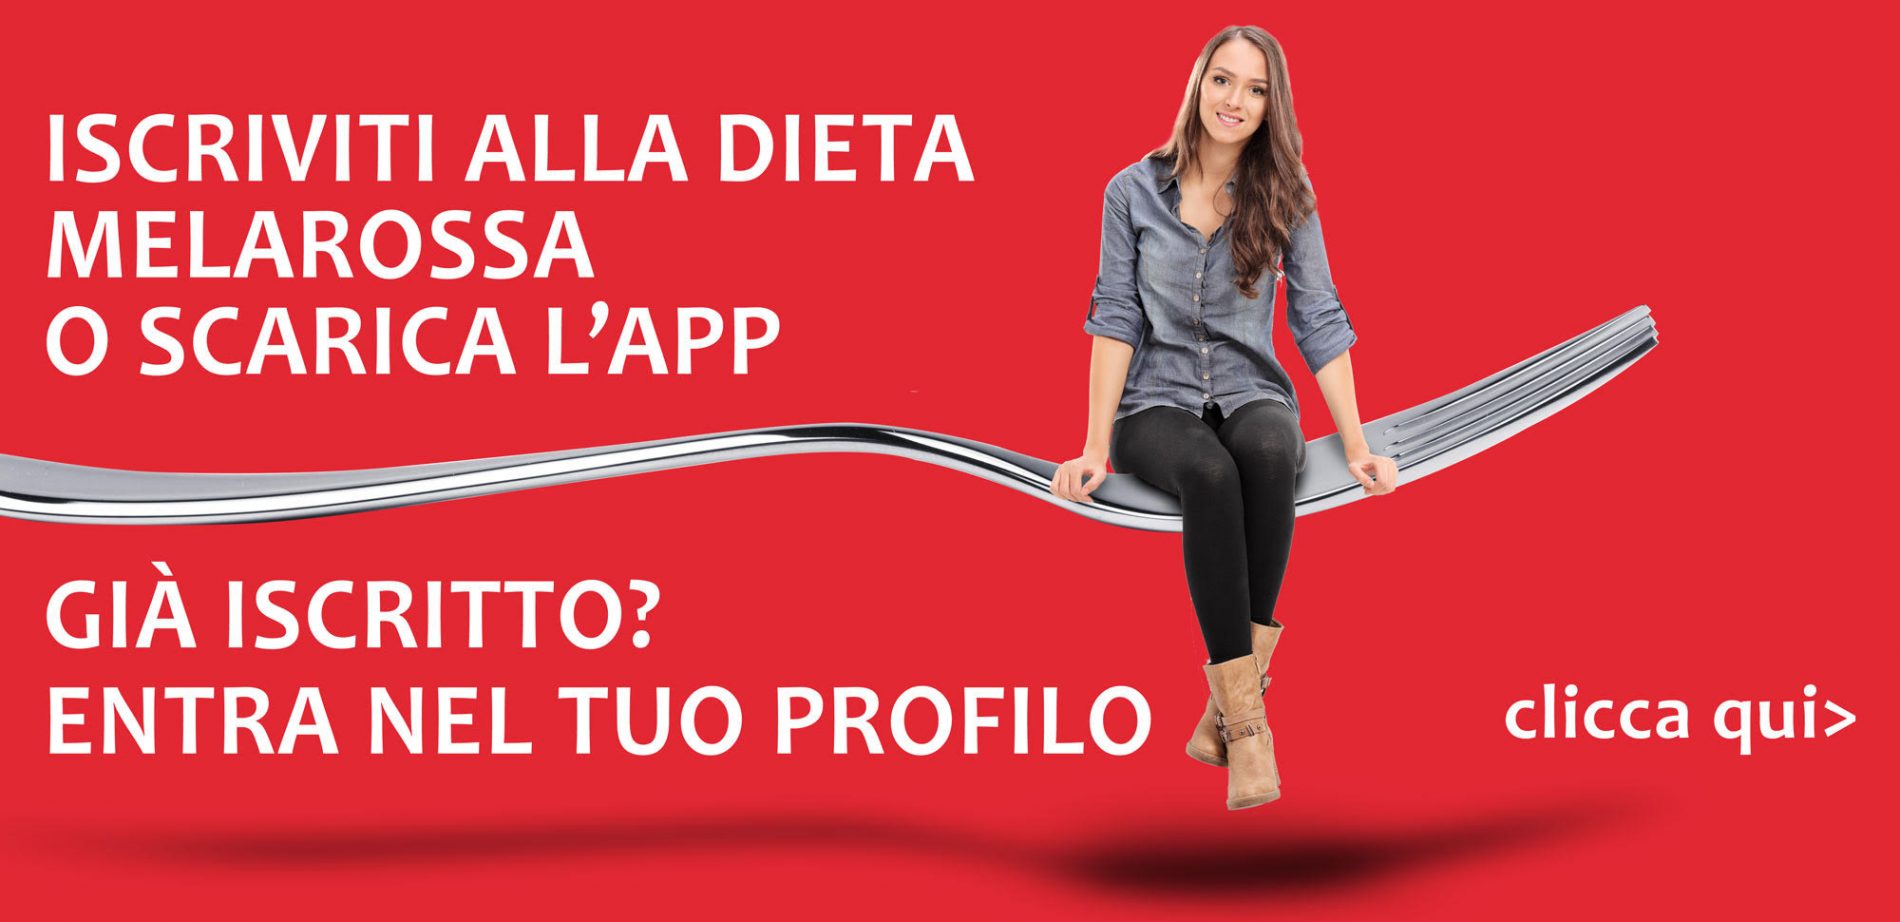 banner iscrizione dieta Melarossa